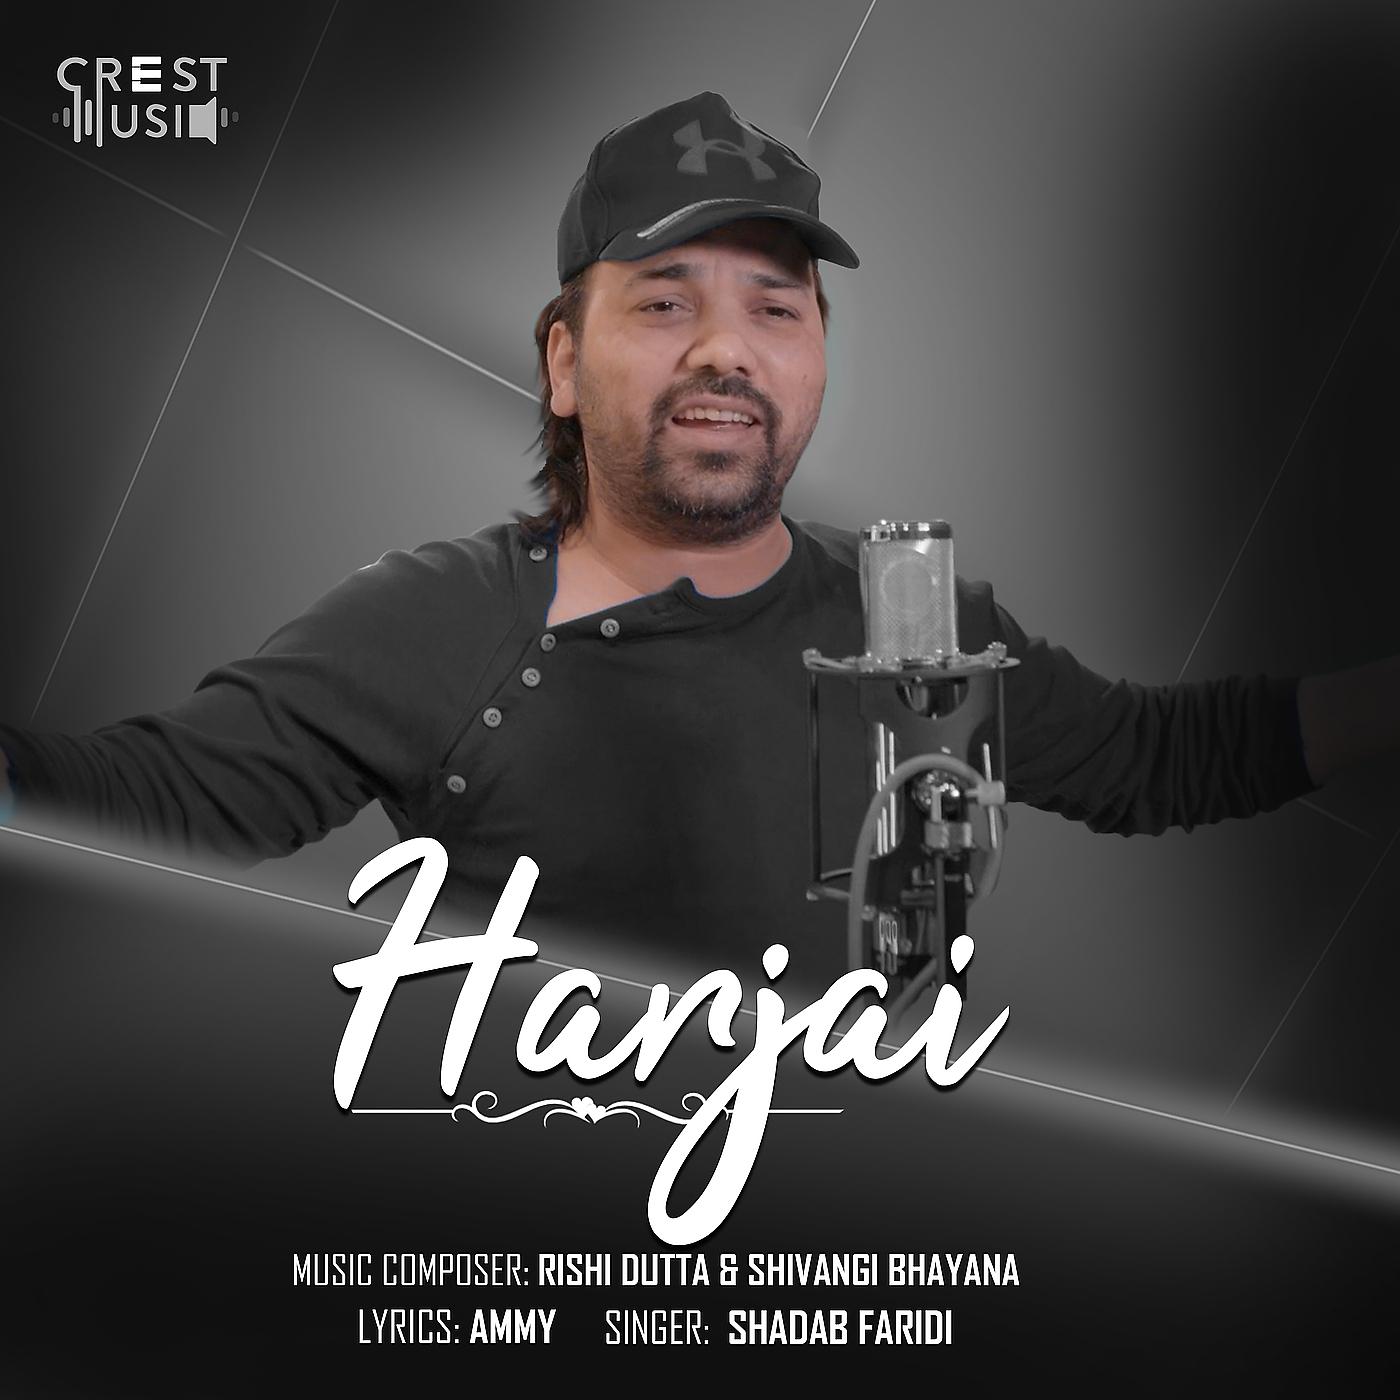 Постер альбома Harjai